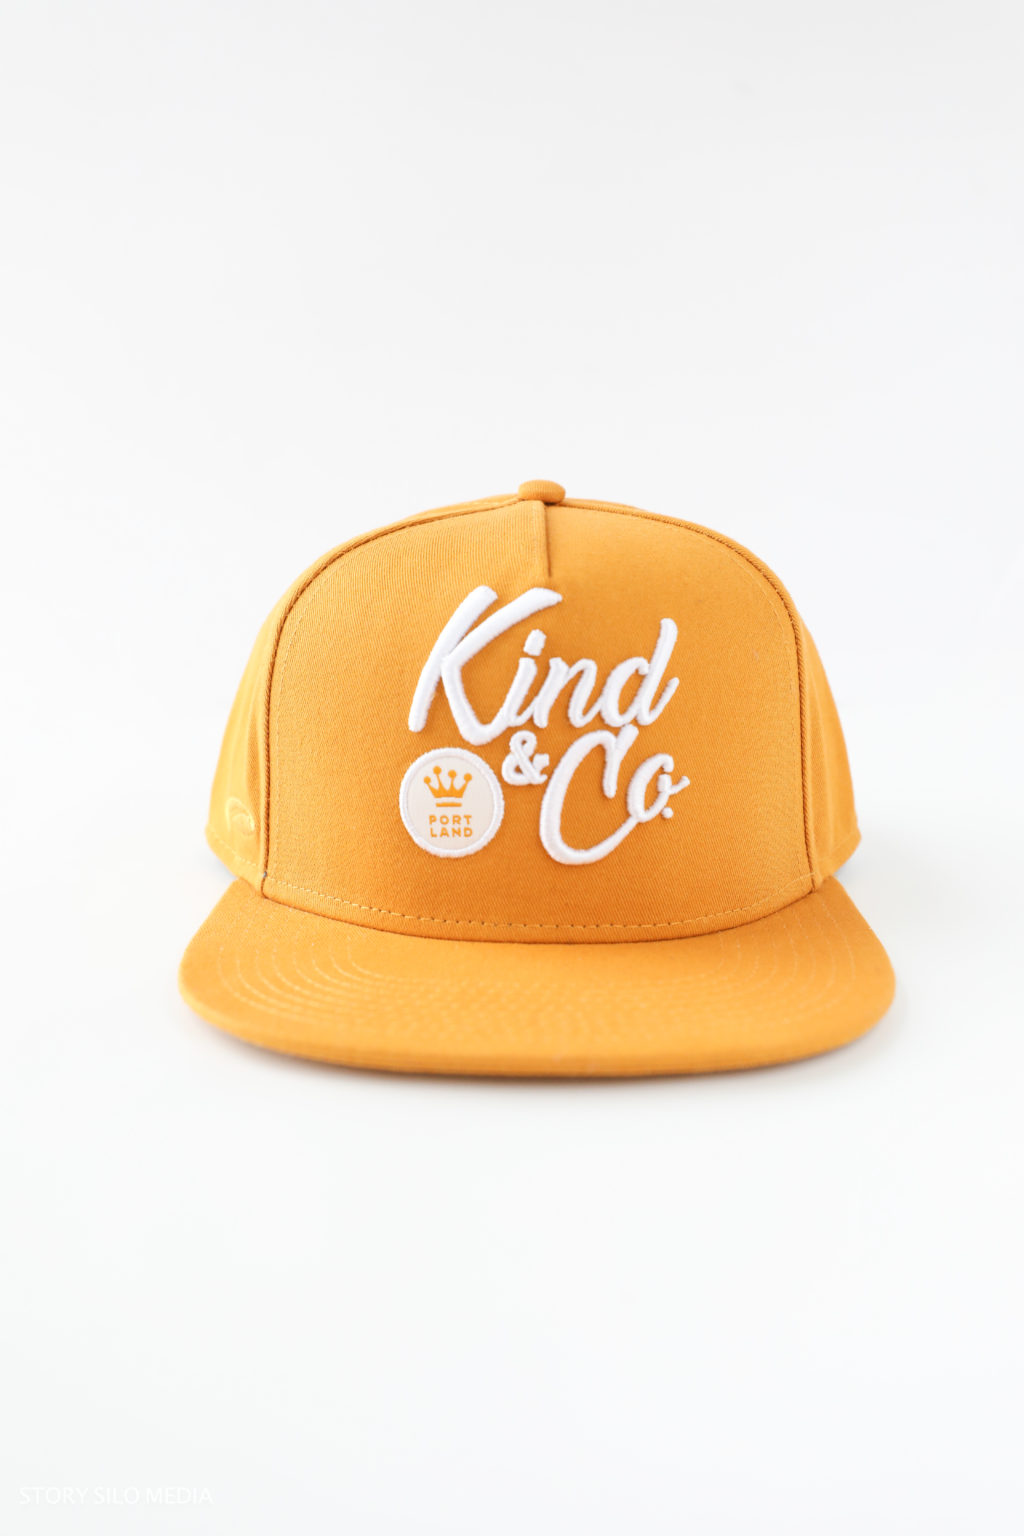 Image of Kind & Co. Yellow baseball hat